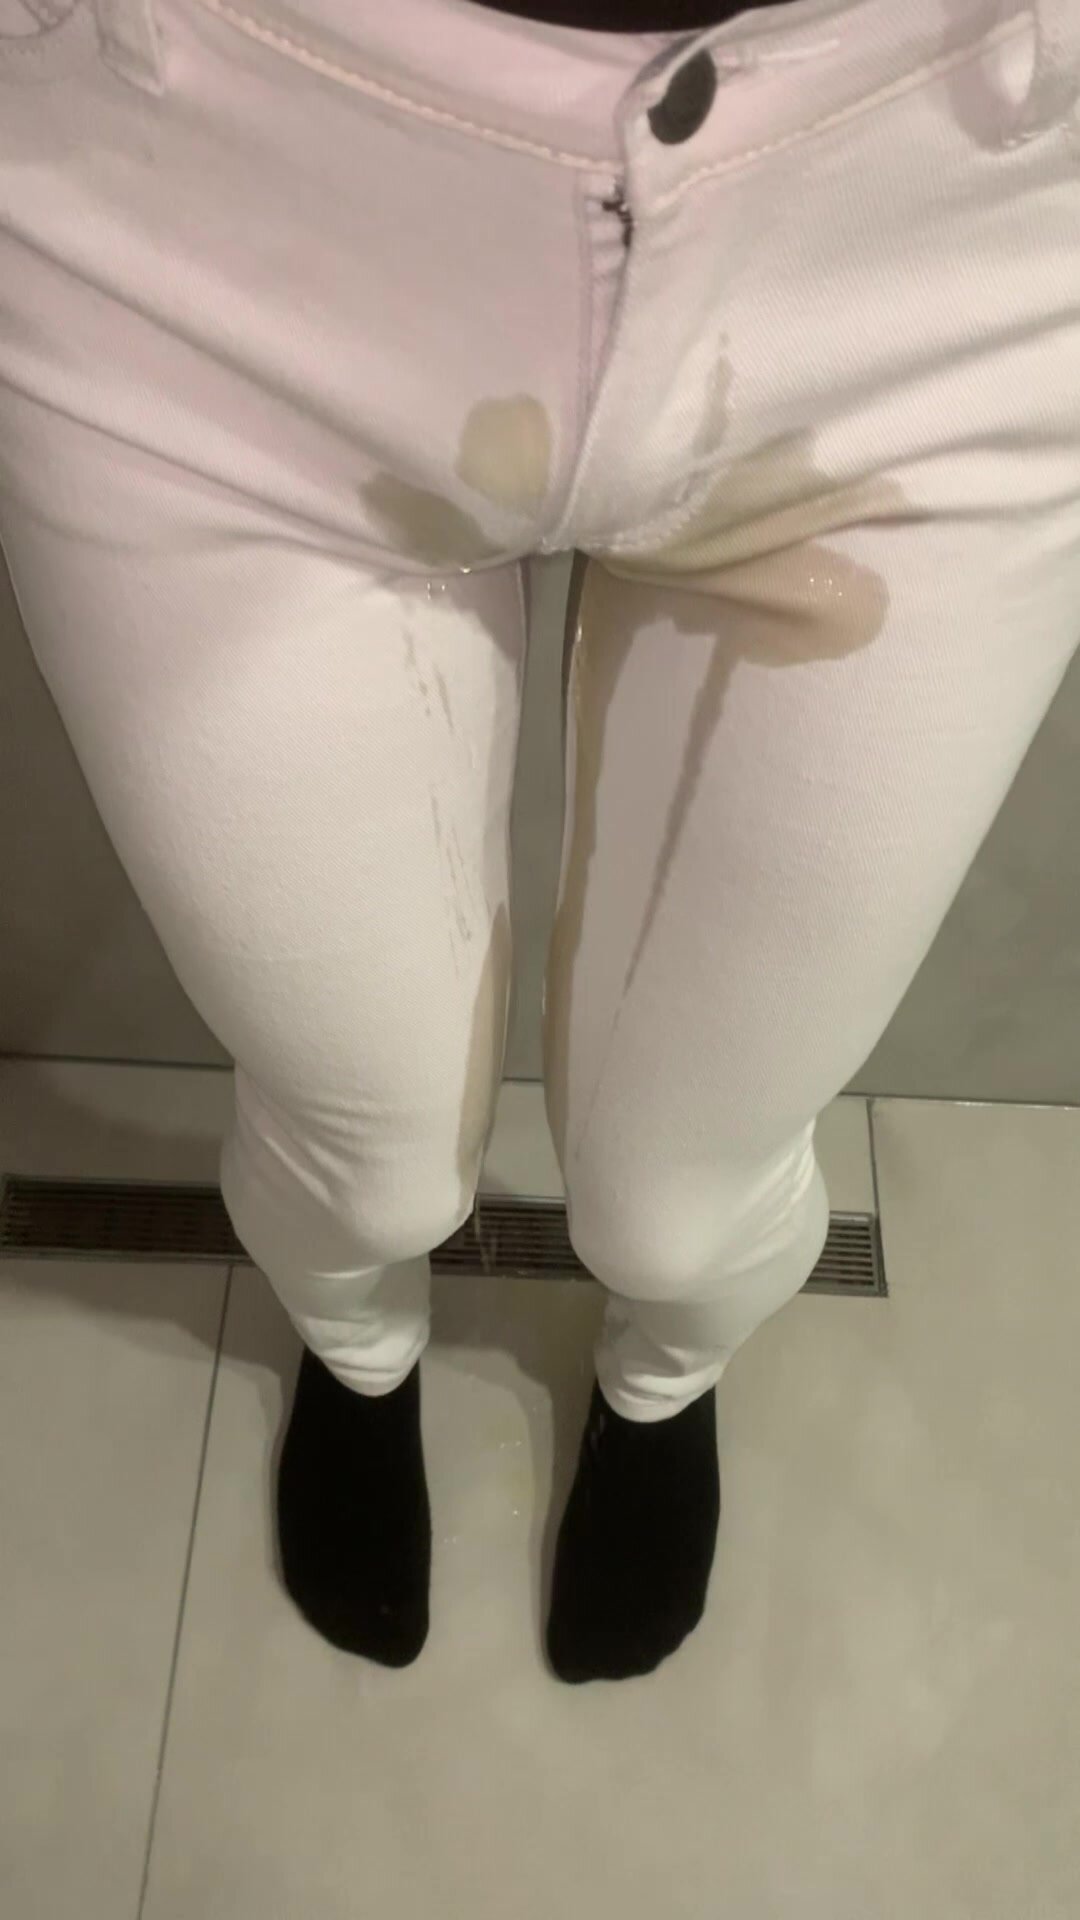 Asian bottom lose control in white super skinny jeans